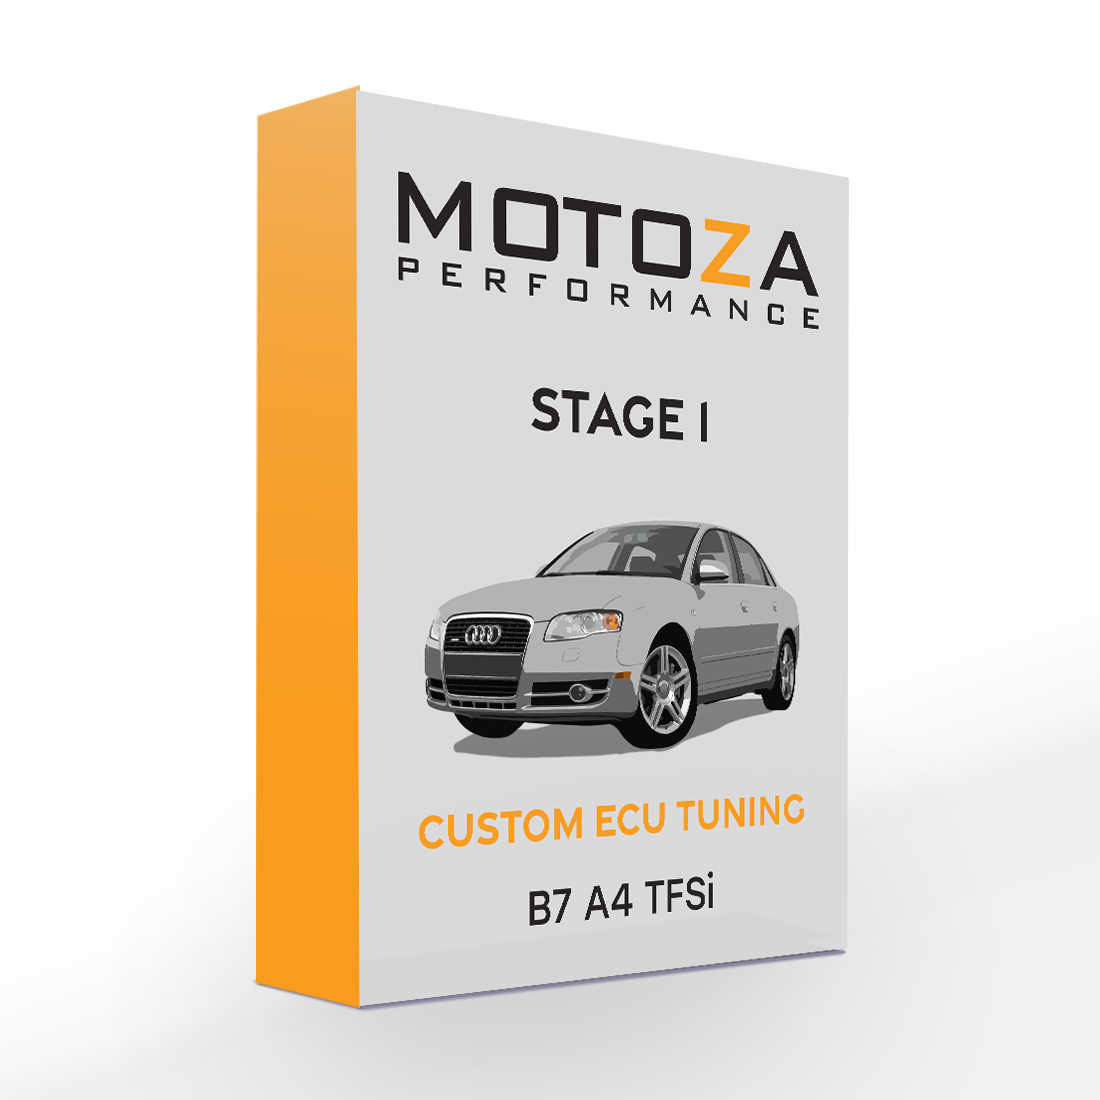 Stage 1 Tune: Audi A4 (B7 / 2.0T FSI/ EA113) – Motoza Performance